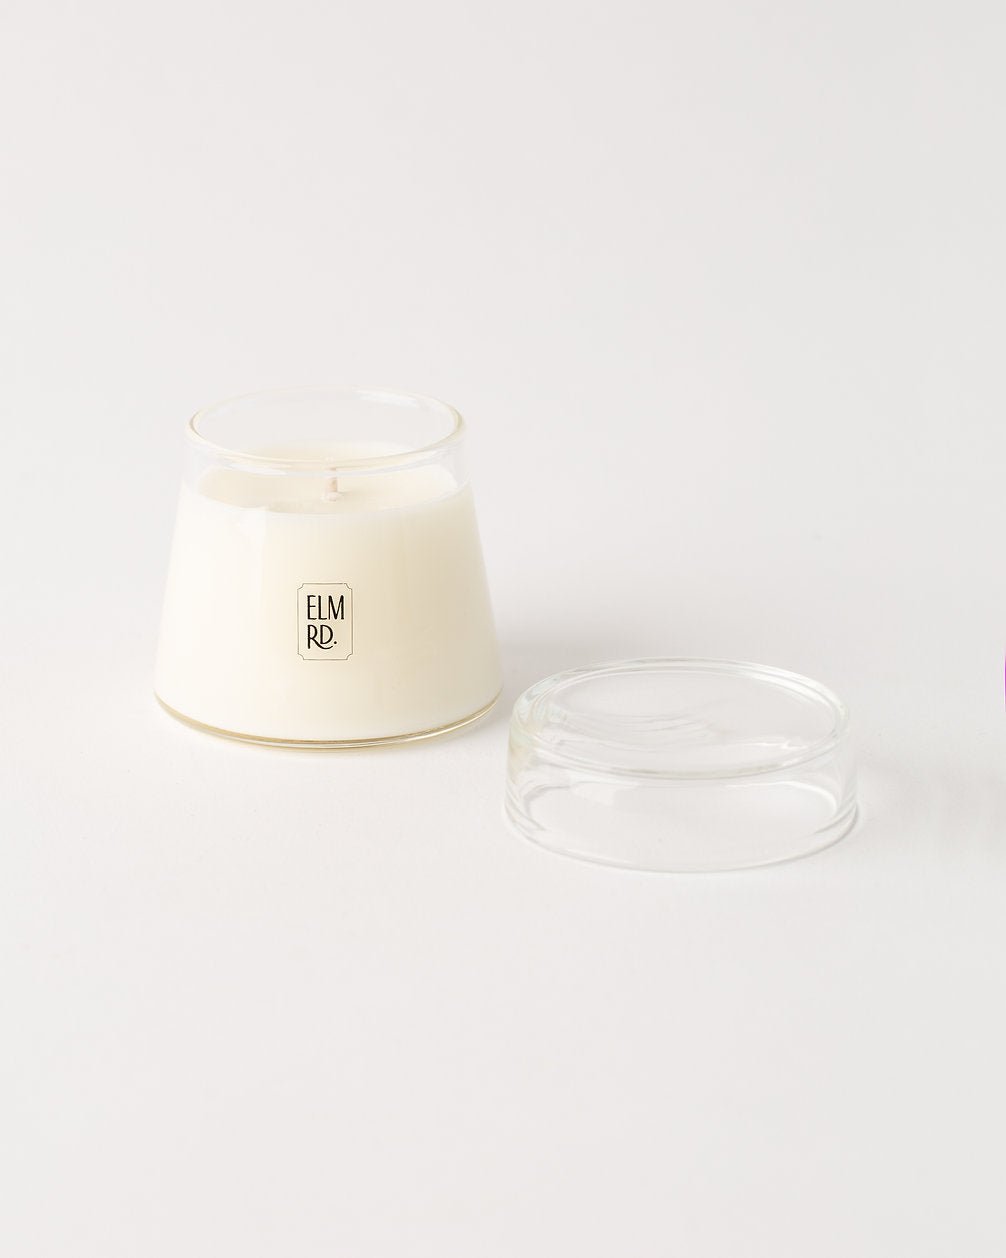 Intimacy Mini Aromatherapy Candle - IOSOI Skin Lab